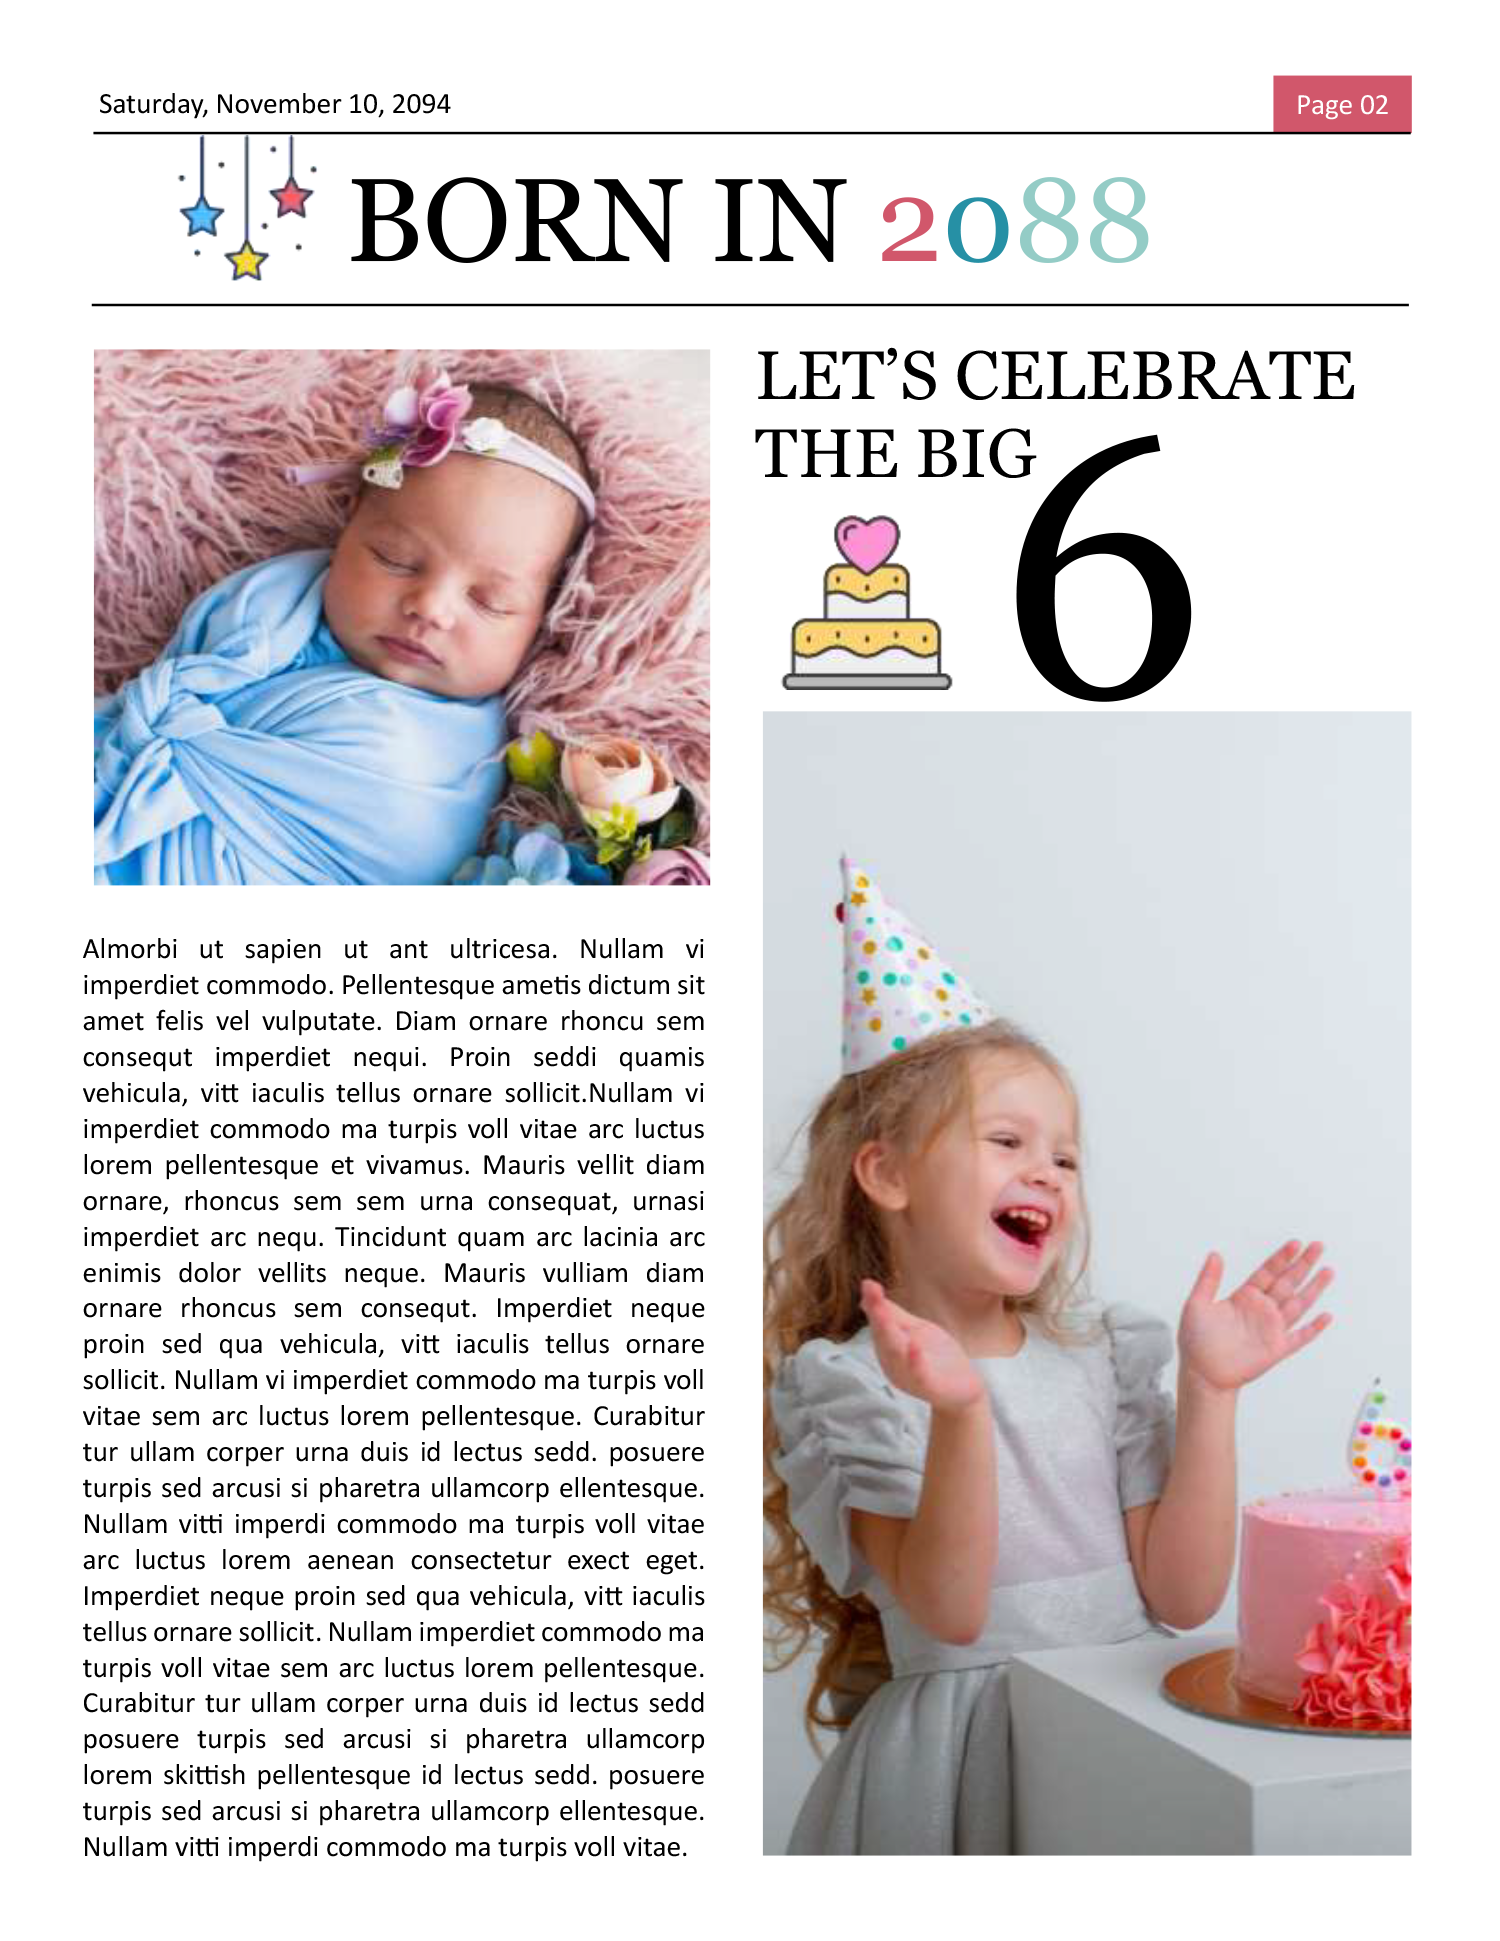 Birthday Newspaper Template - Page 02